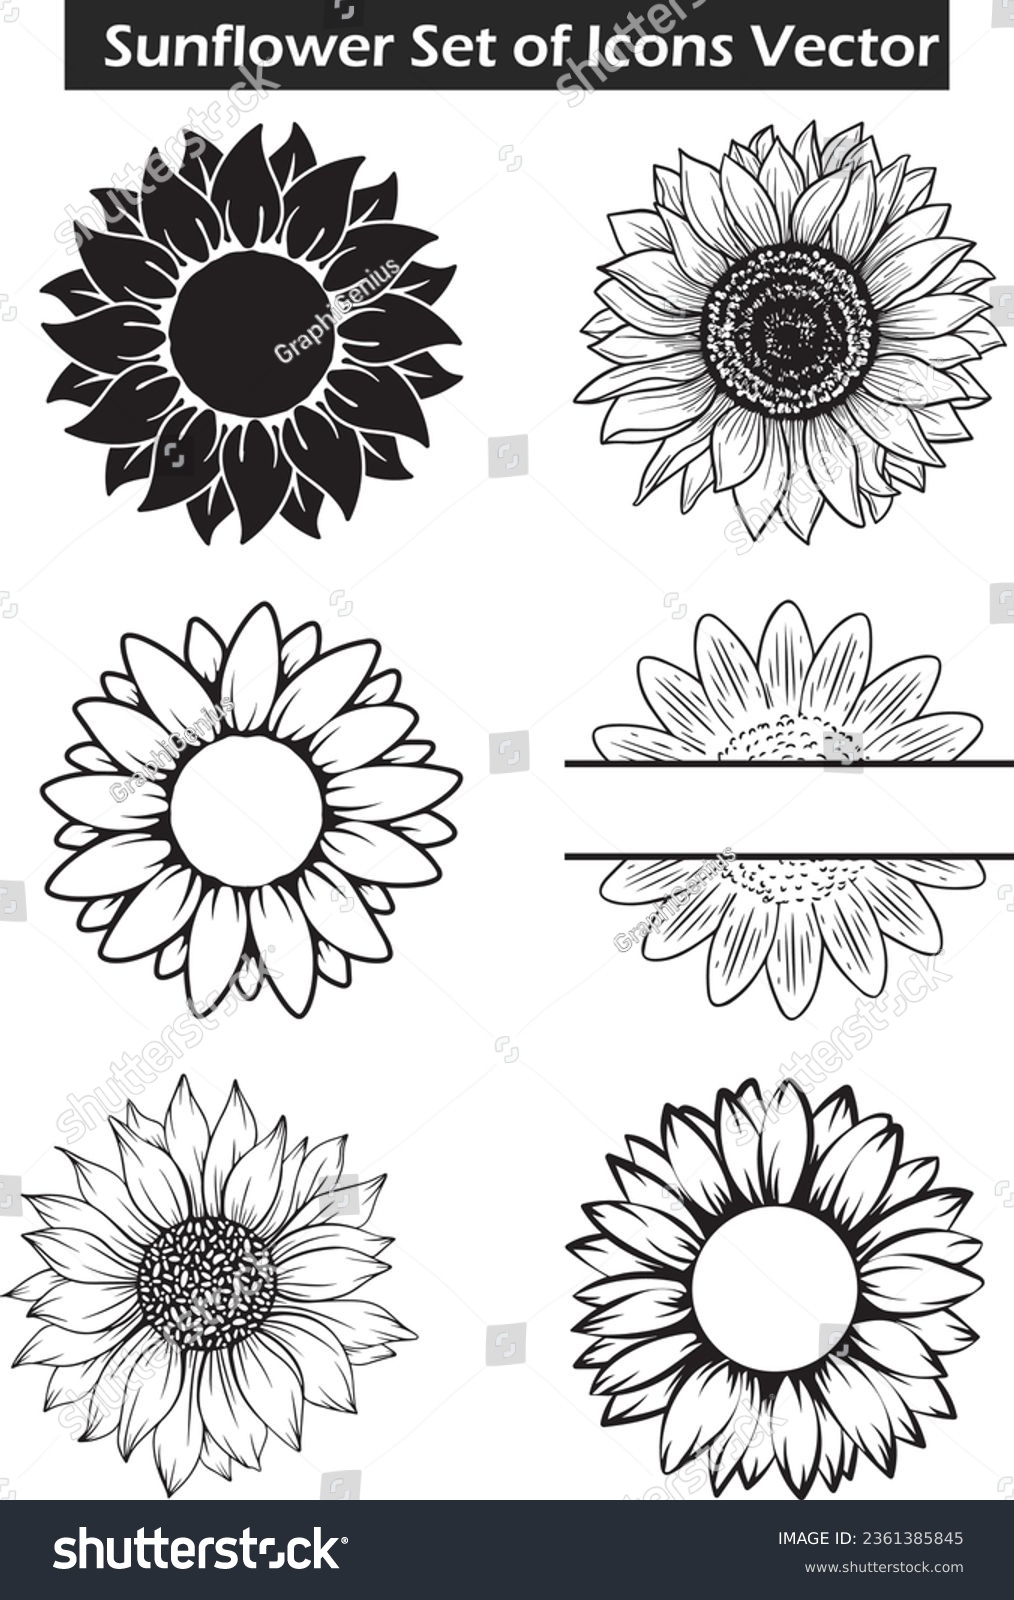 SVG of Sunflower SVG Set, Floral, Bundle, T-shirt, Vinyl, Vector, Graphic, Cricut, Silhouette, Digital svg